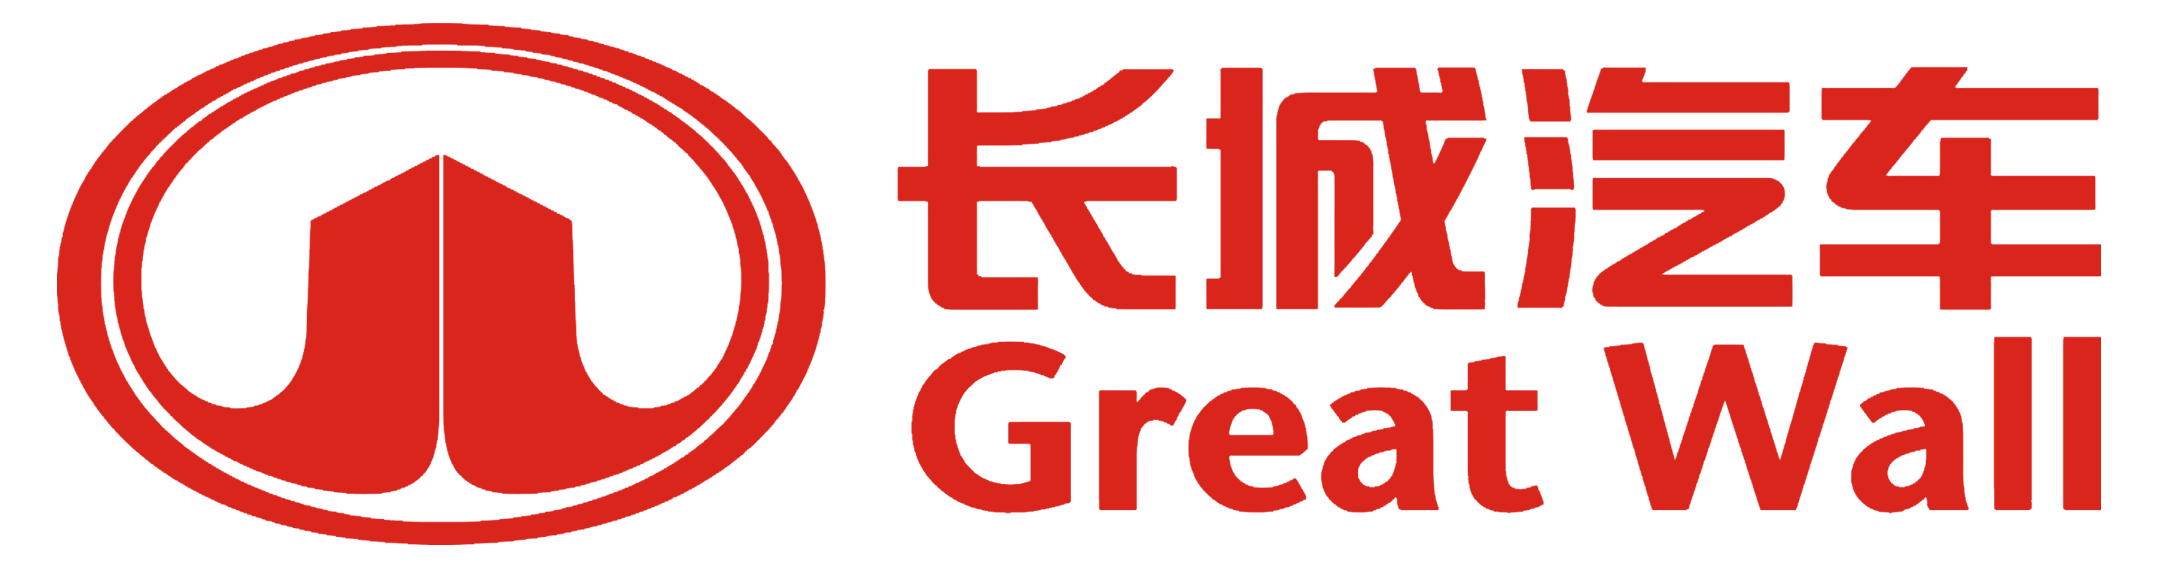 Great Wall Motors Logo - File:Great Wall Motors logo 2.png - Wikimedia Commons